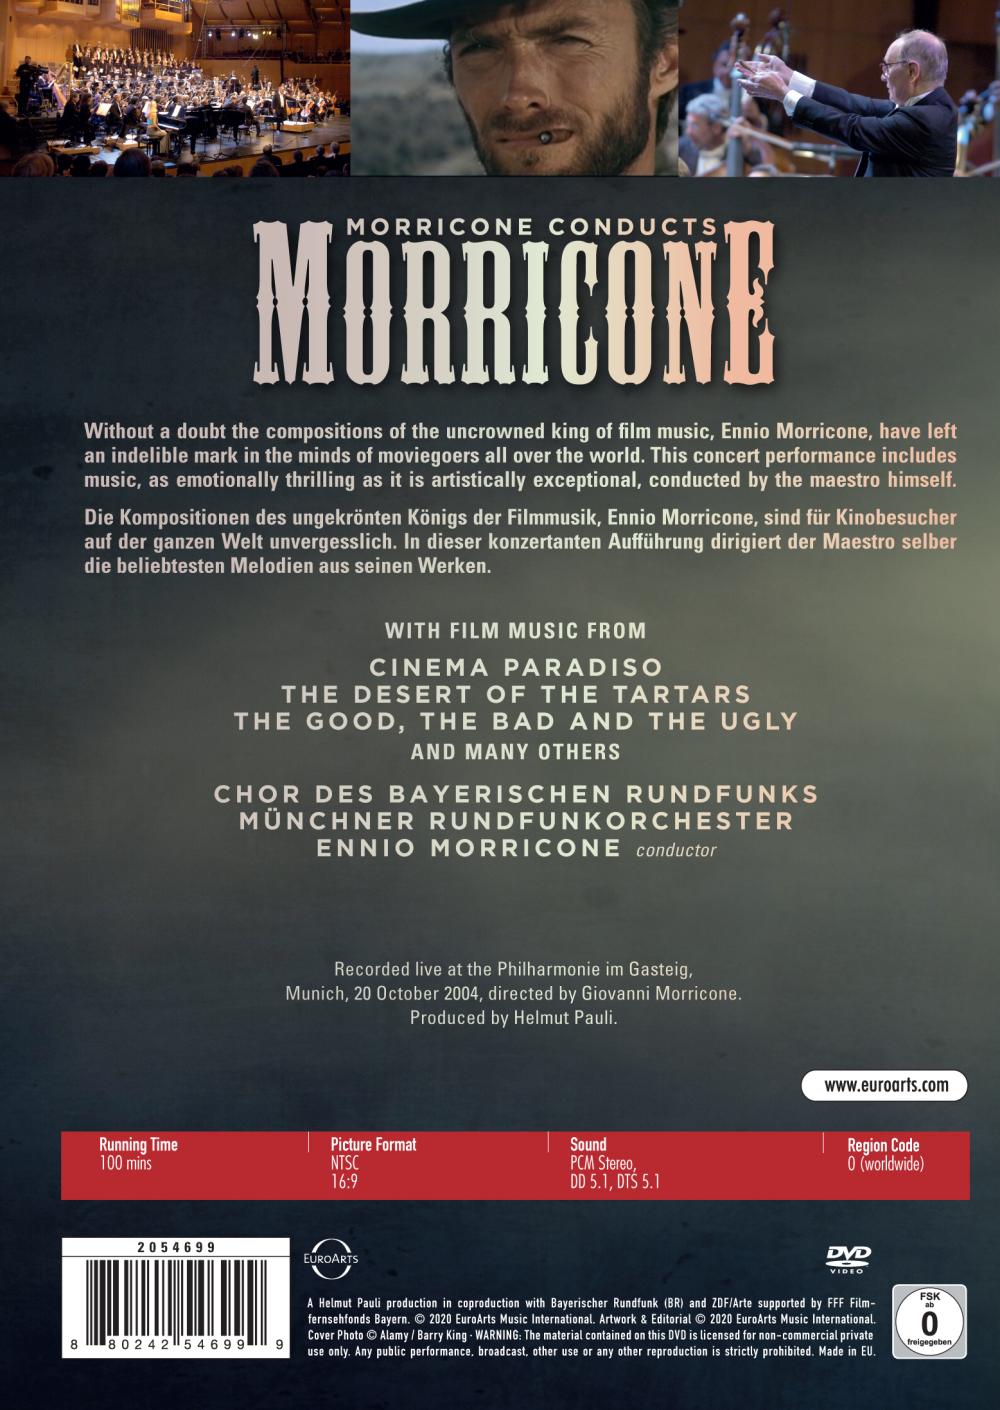 Morricone Conducts Morricone - EUROARTS